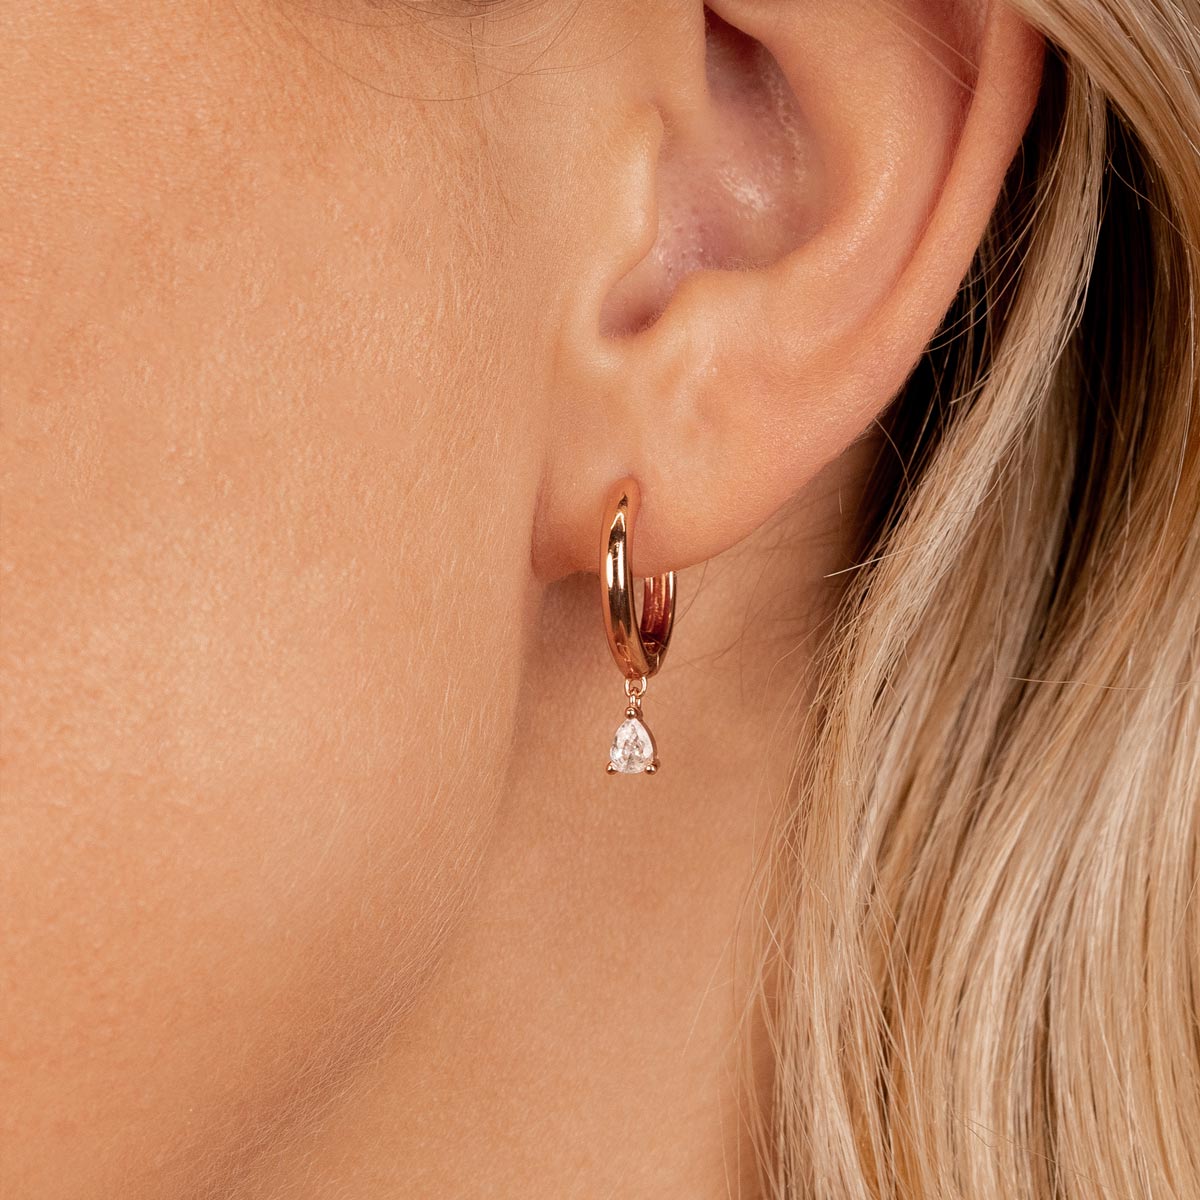 Rose gold hoop earrings with pendant